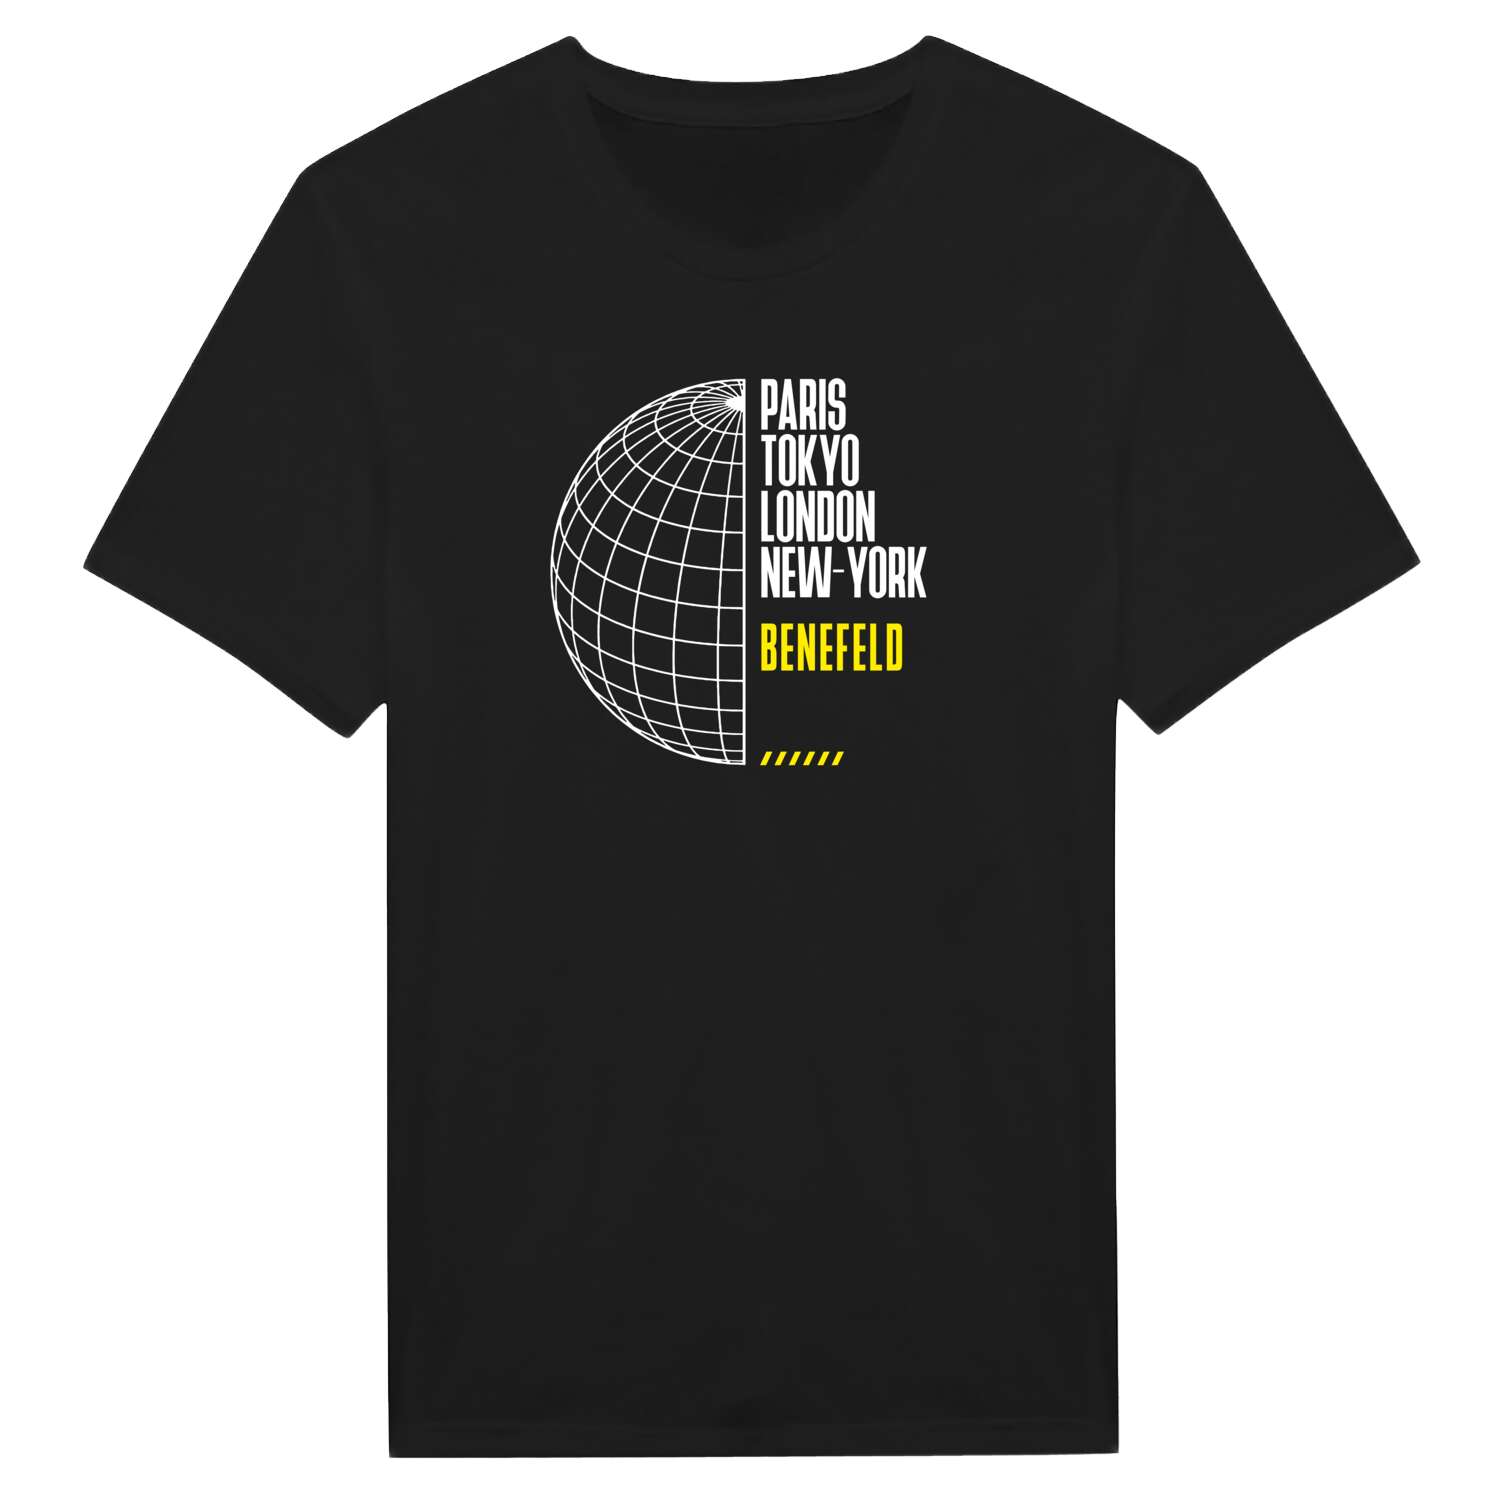 Benefeld T-Shirt »Paris Tokyo London«